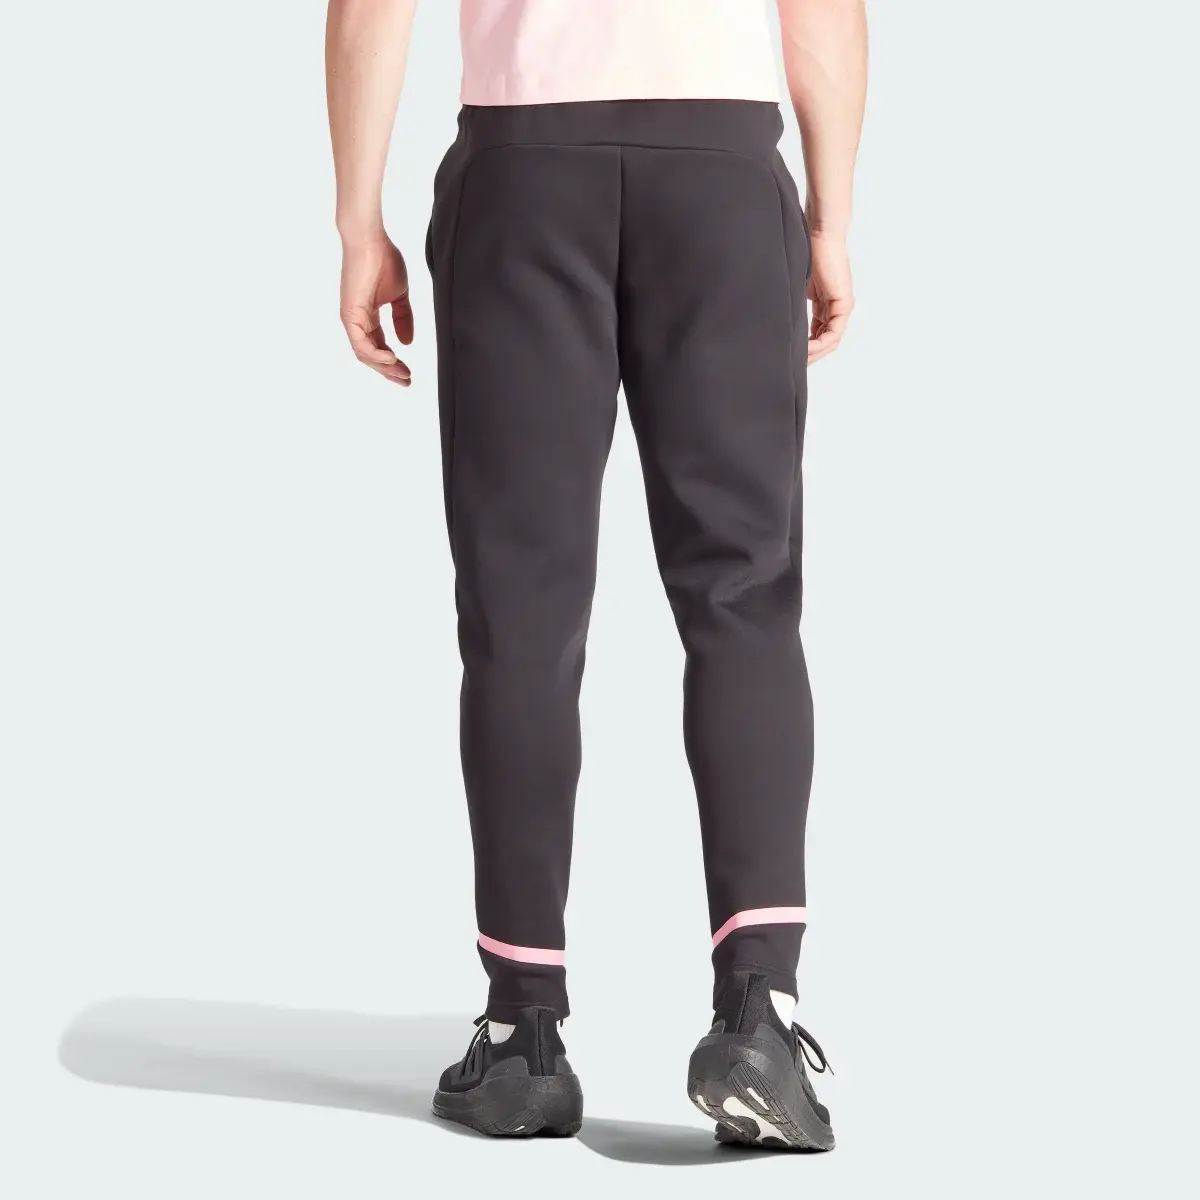 Adidas Pantalon Inter Miami CF Designed for Gameday Travel. 3